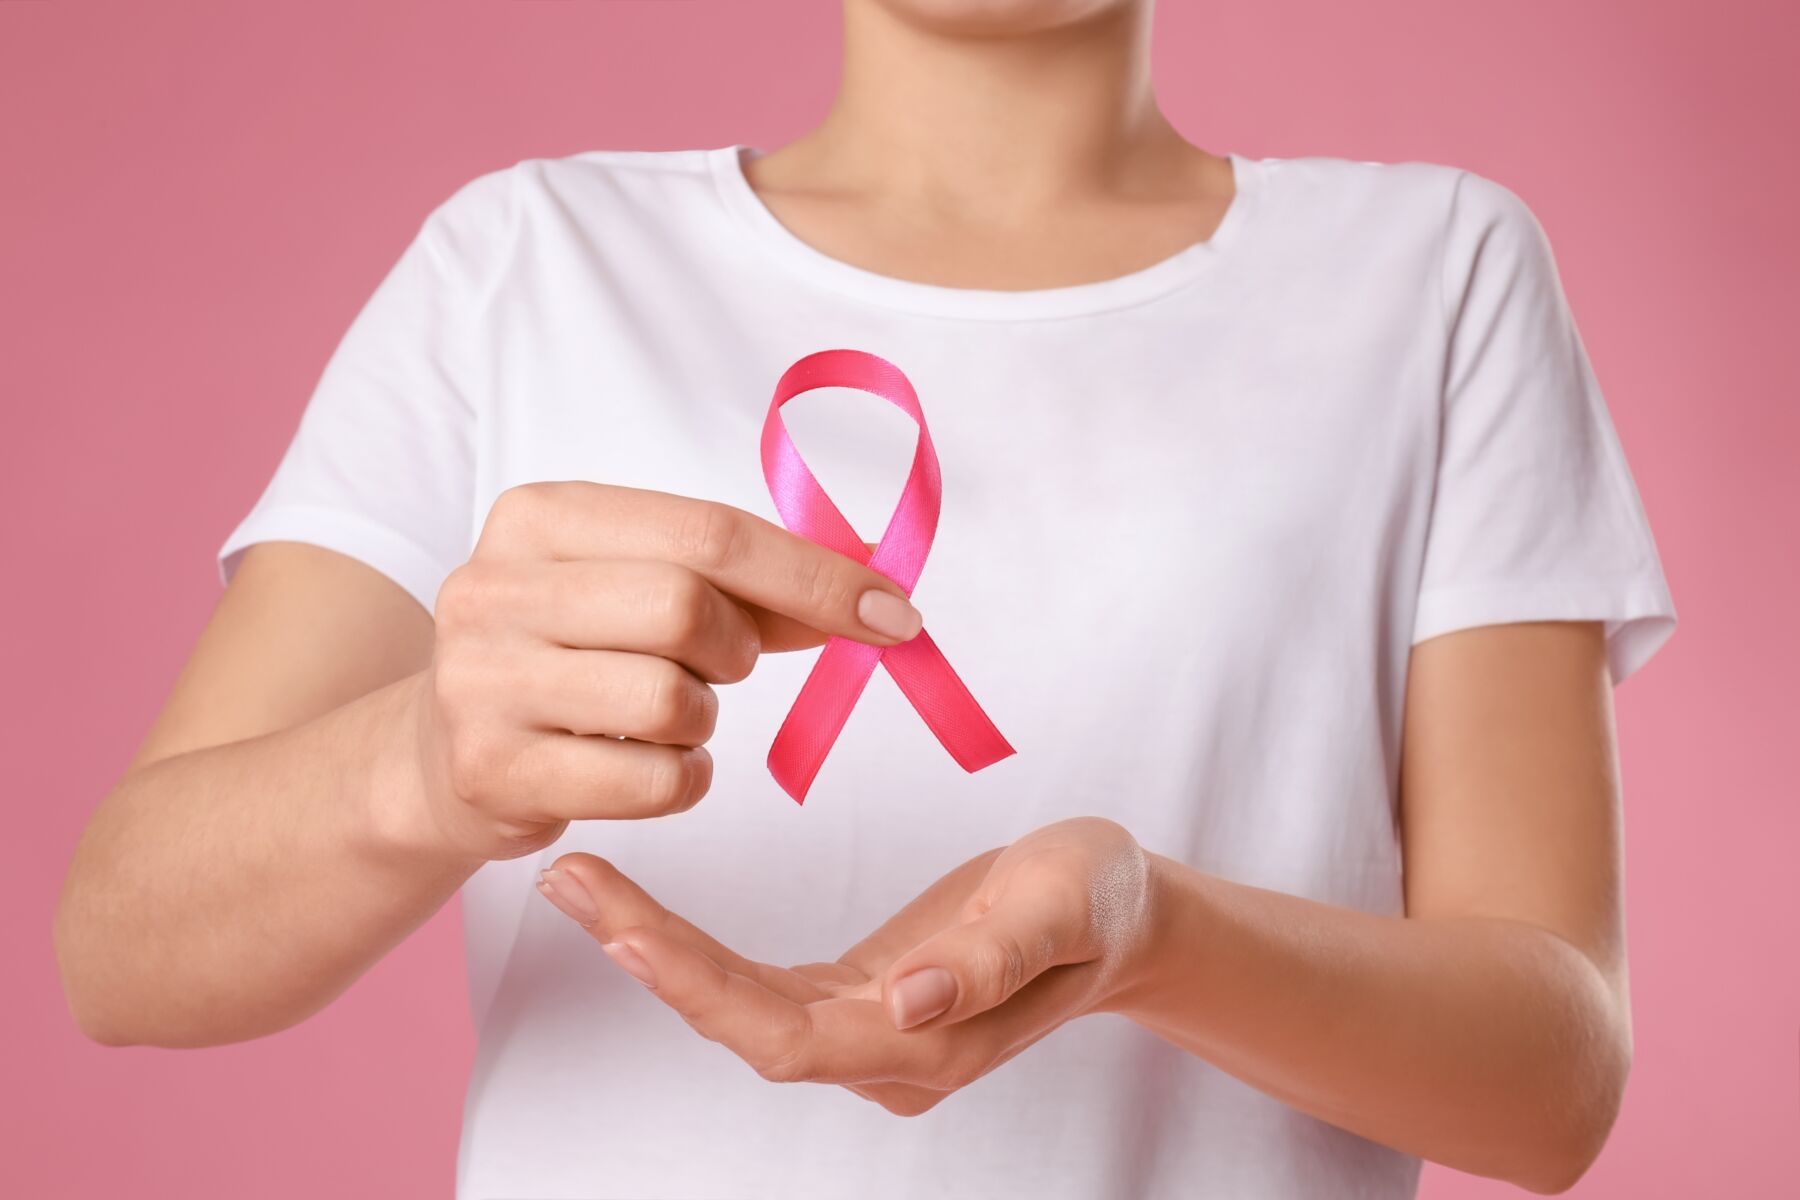 Curso de Enfermagem promove coleta de exames preventivos de câncer de colo de útero